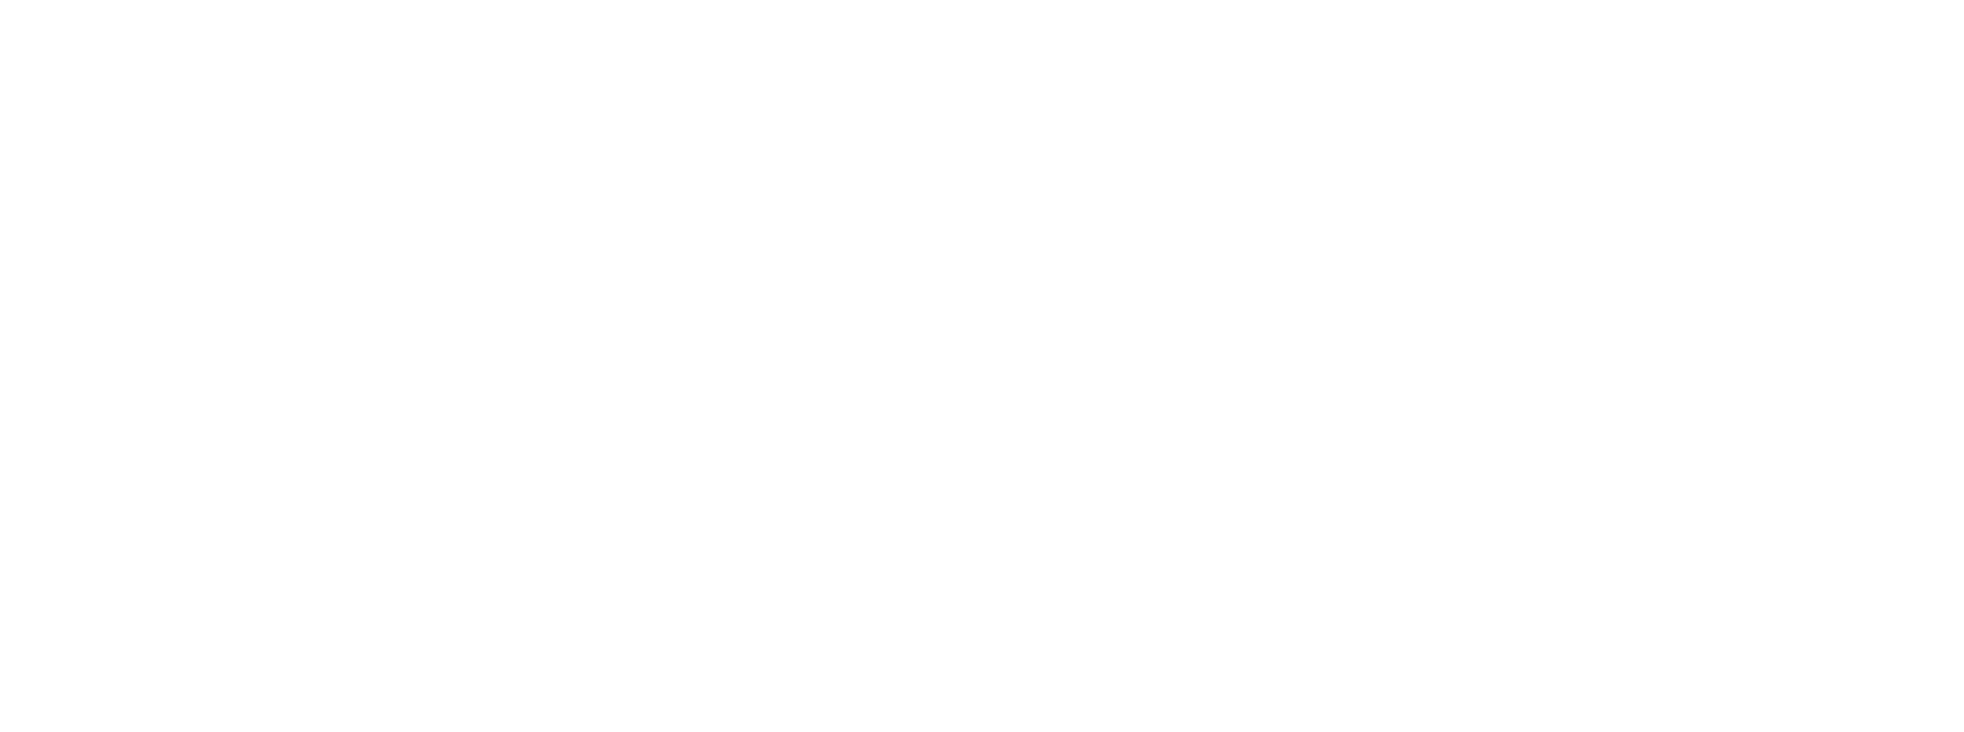 Footer Kode Creators Logo